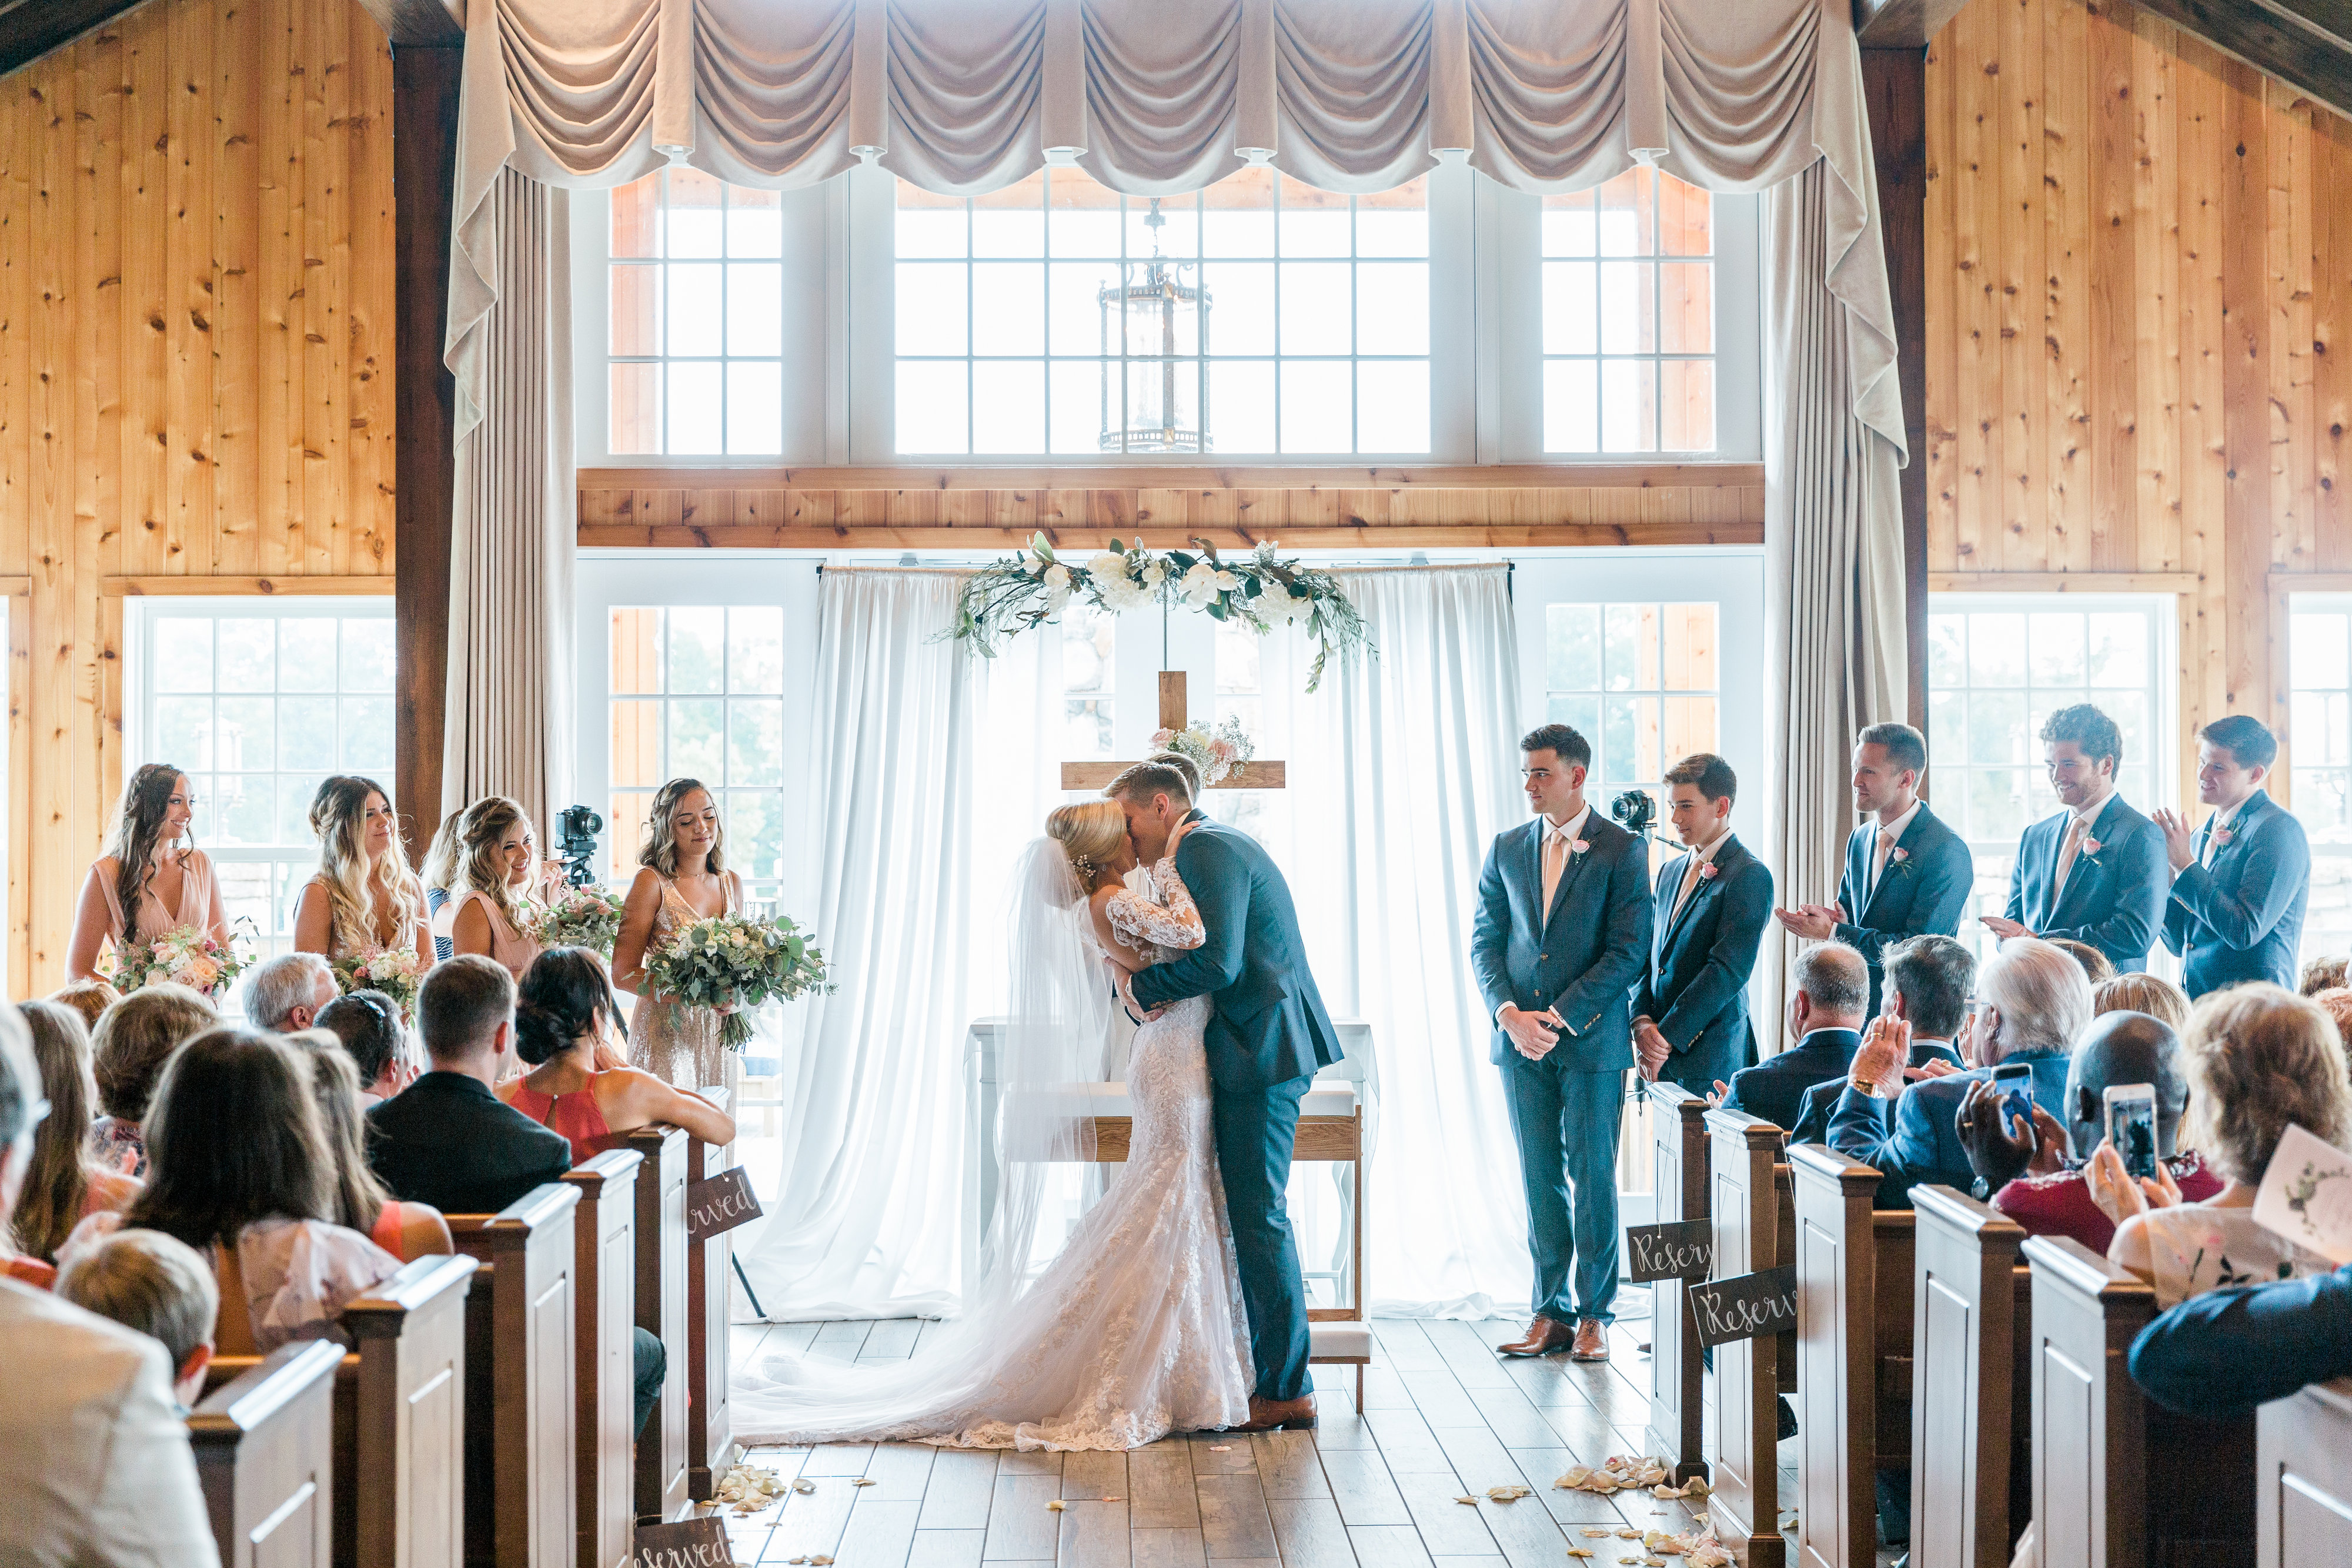 View More: http://chelseaschaeferphotography.pass.us/kesting-wedding-2018